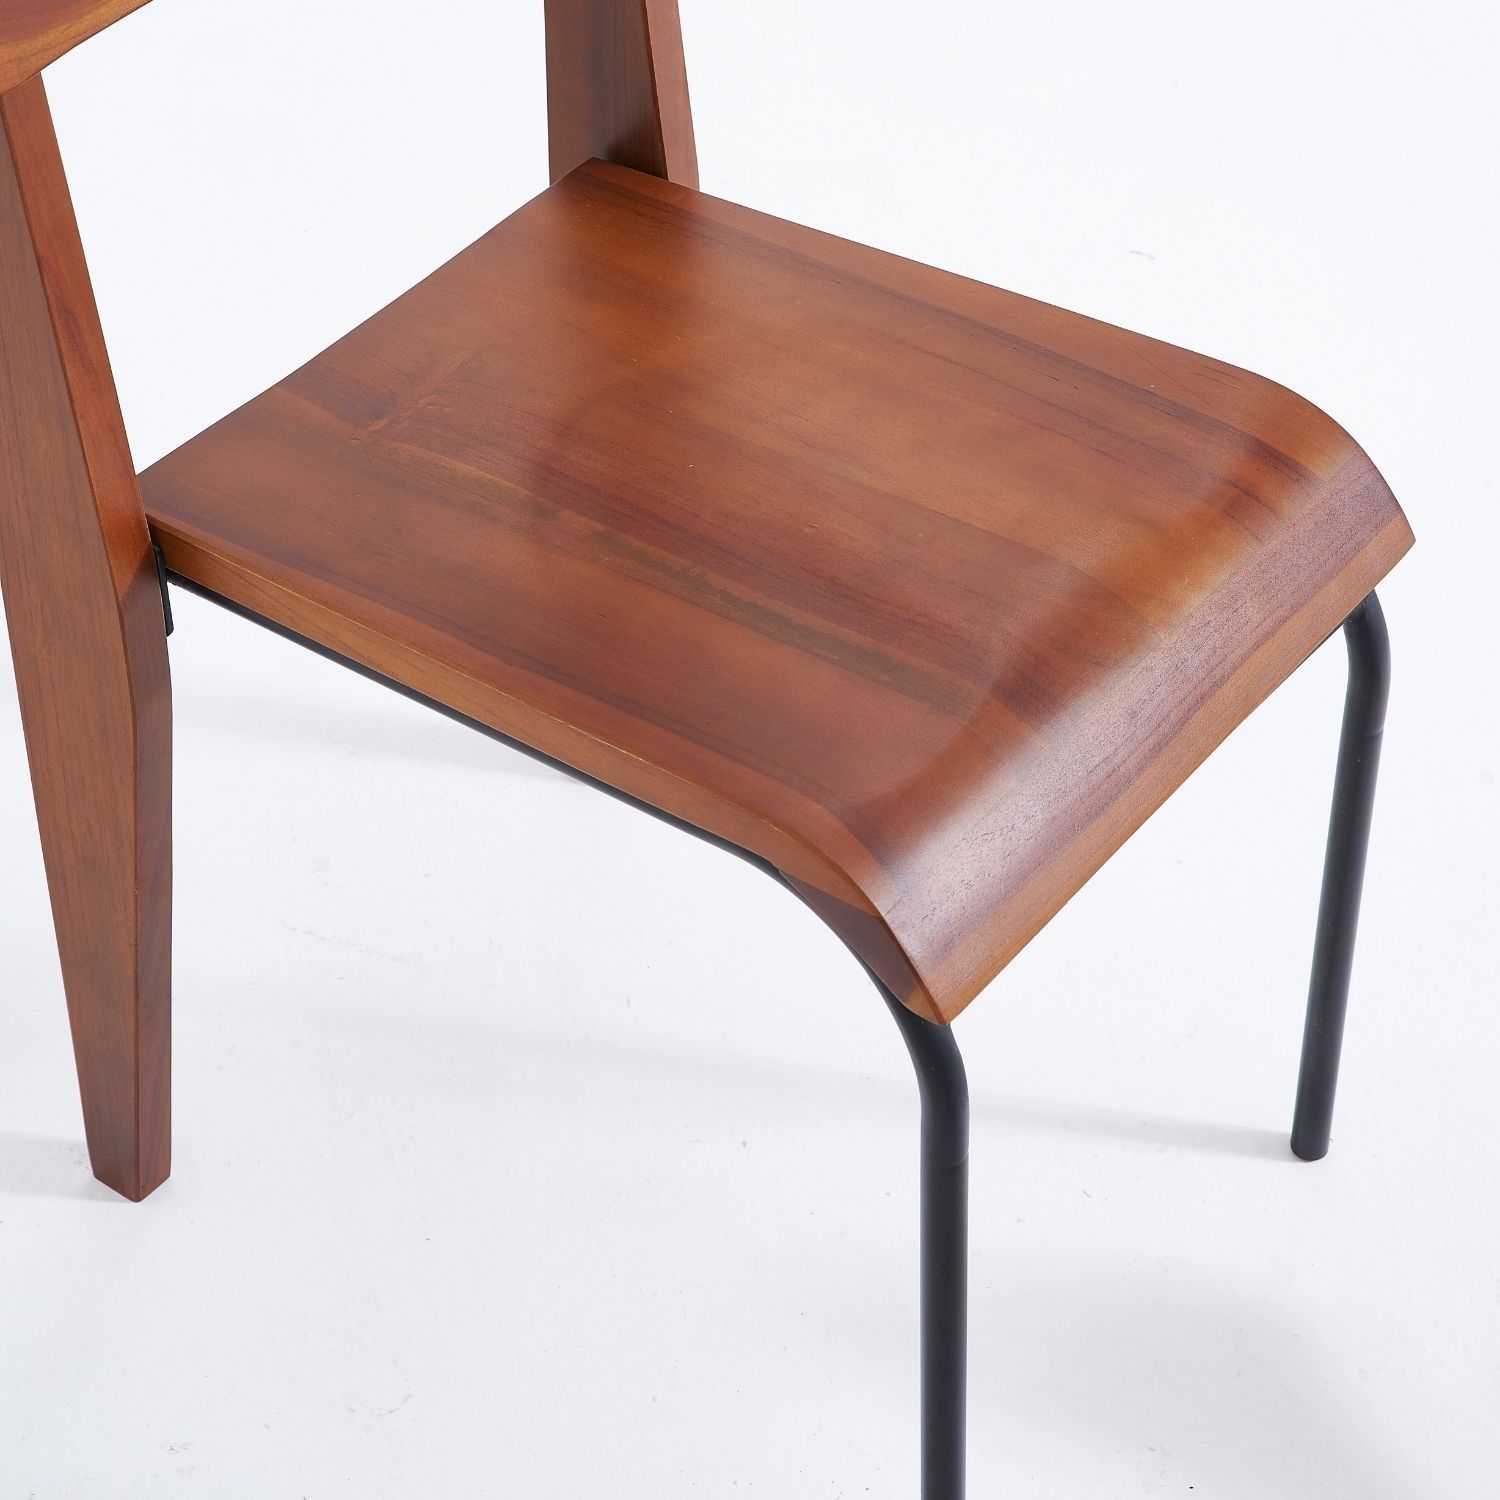 Vitruvian Chair Chair Foundry 